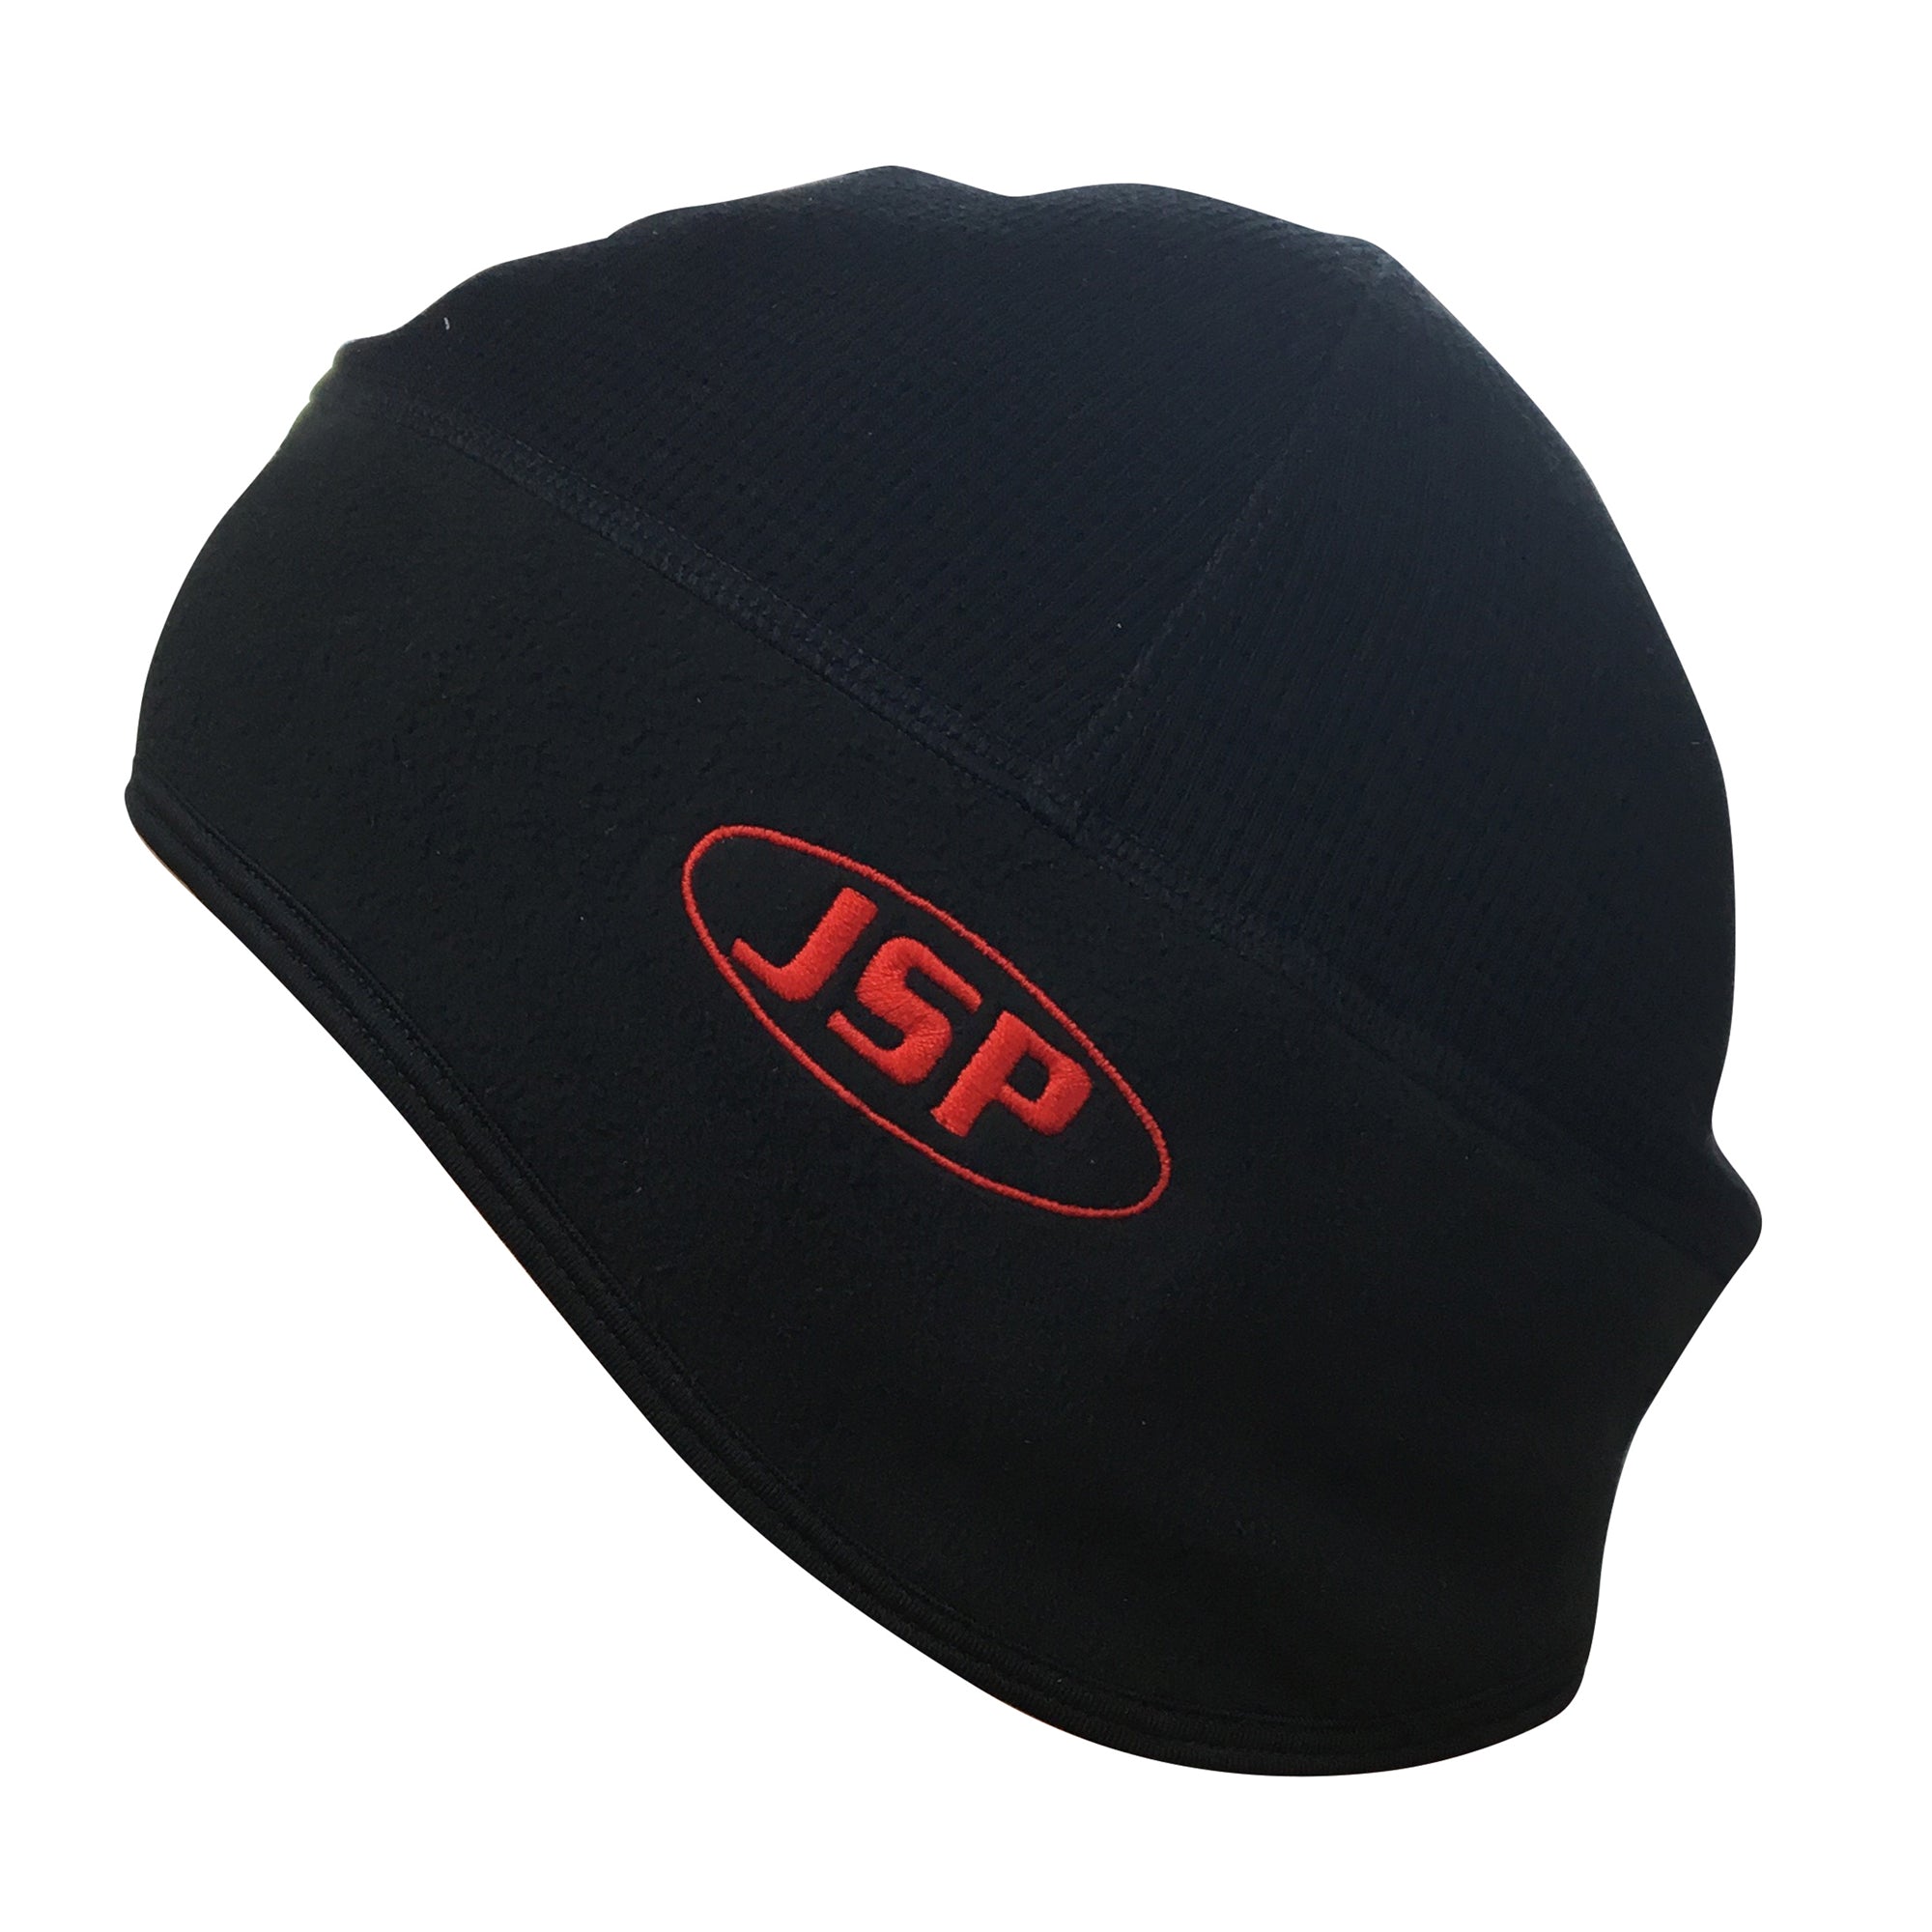 JSP Surefit™ thermal helmet warm liner size medium/large #AVH002-301-100